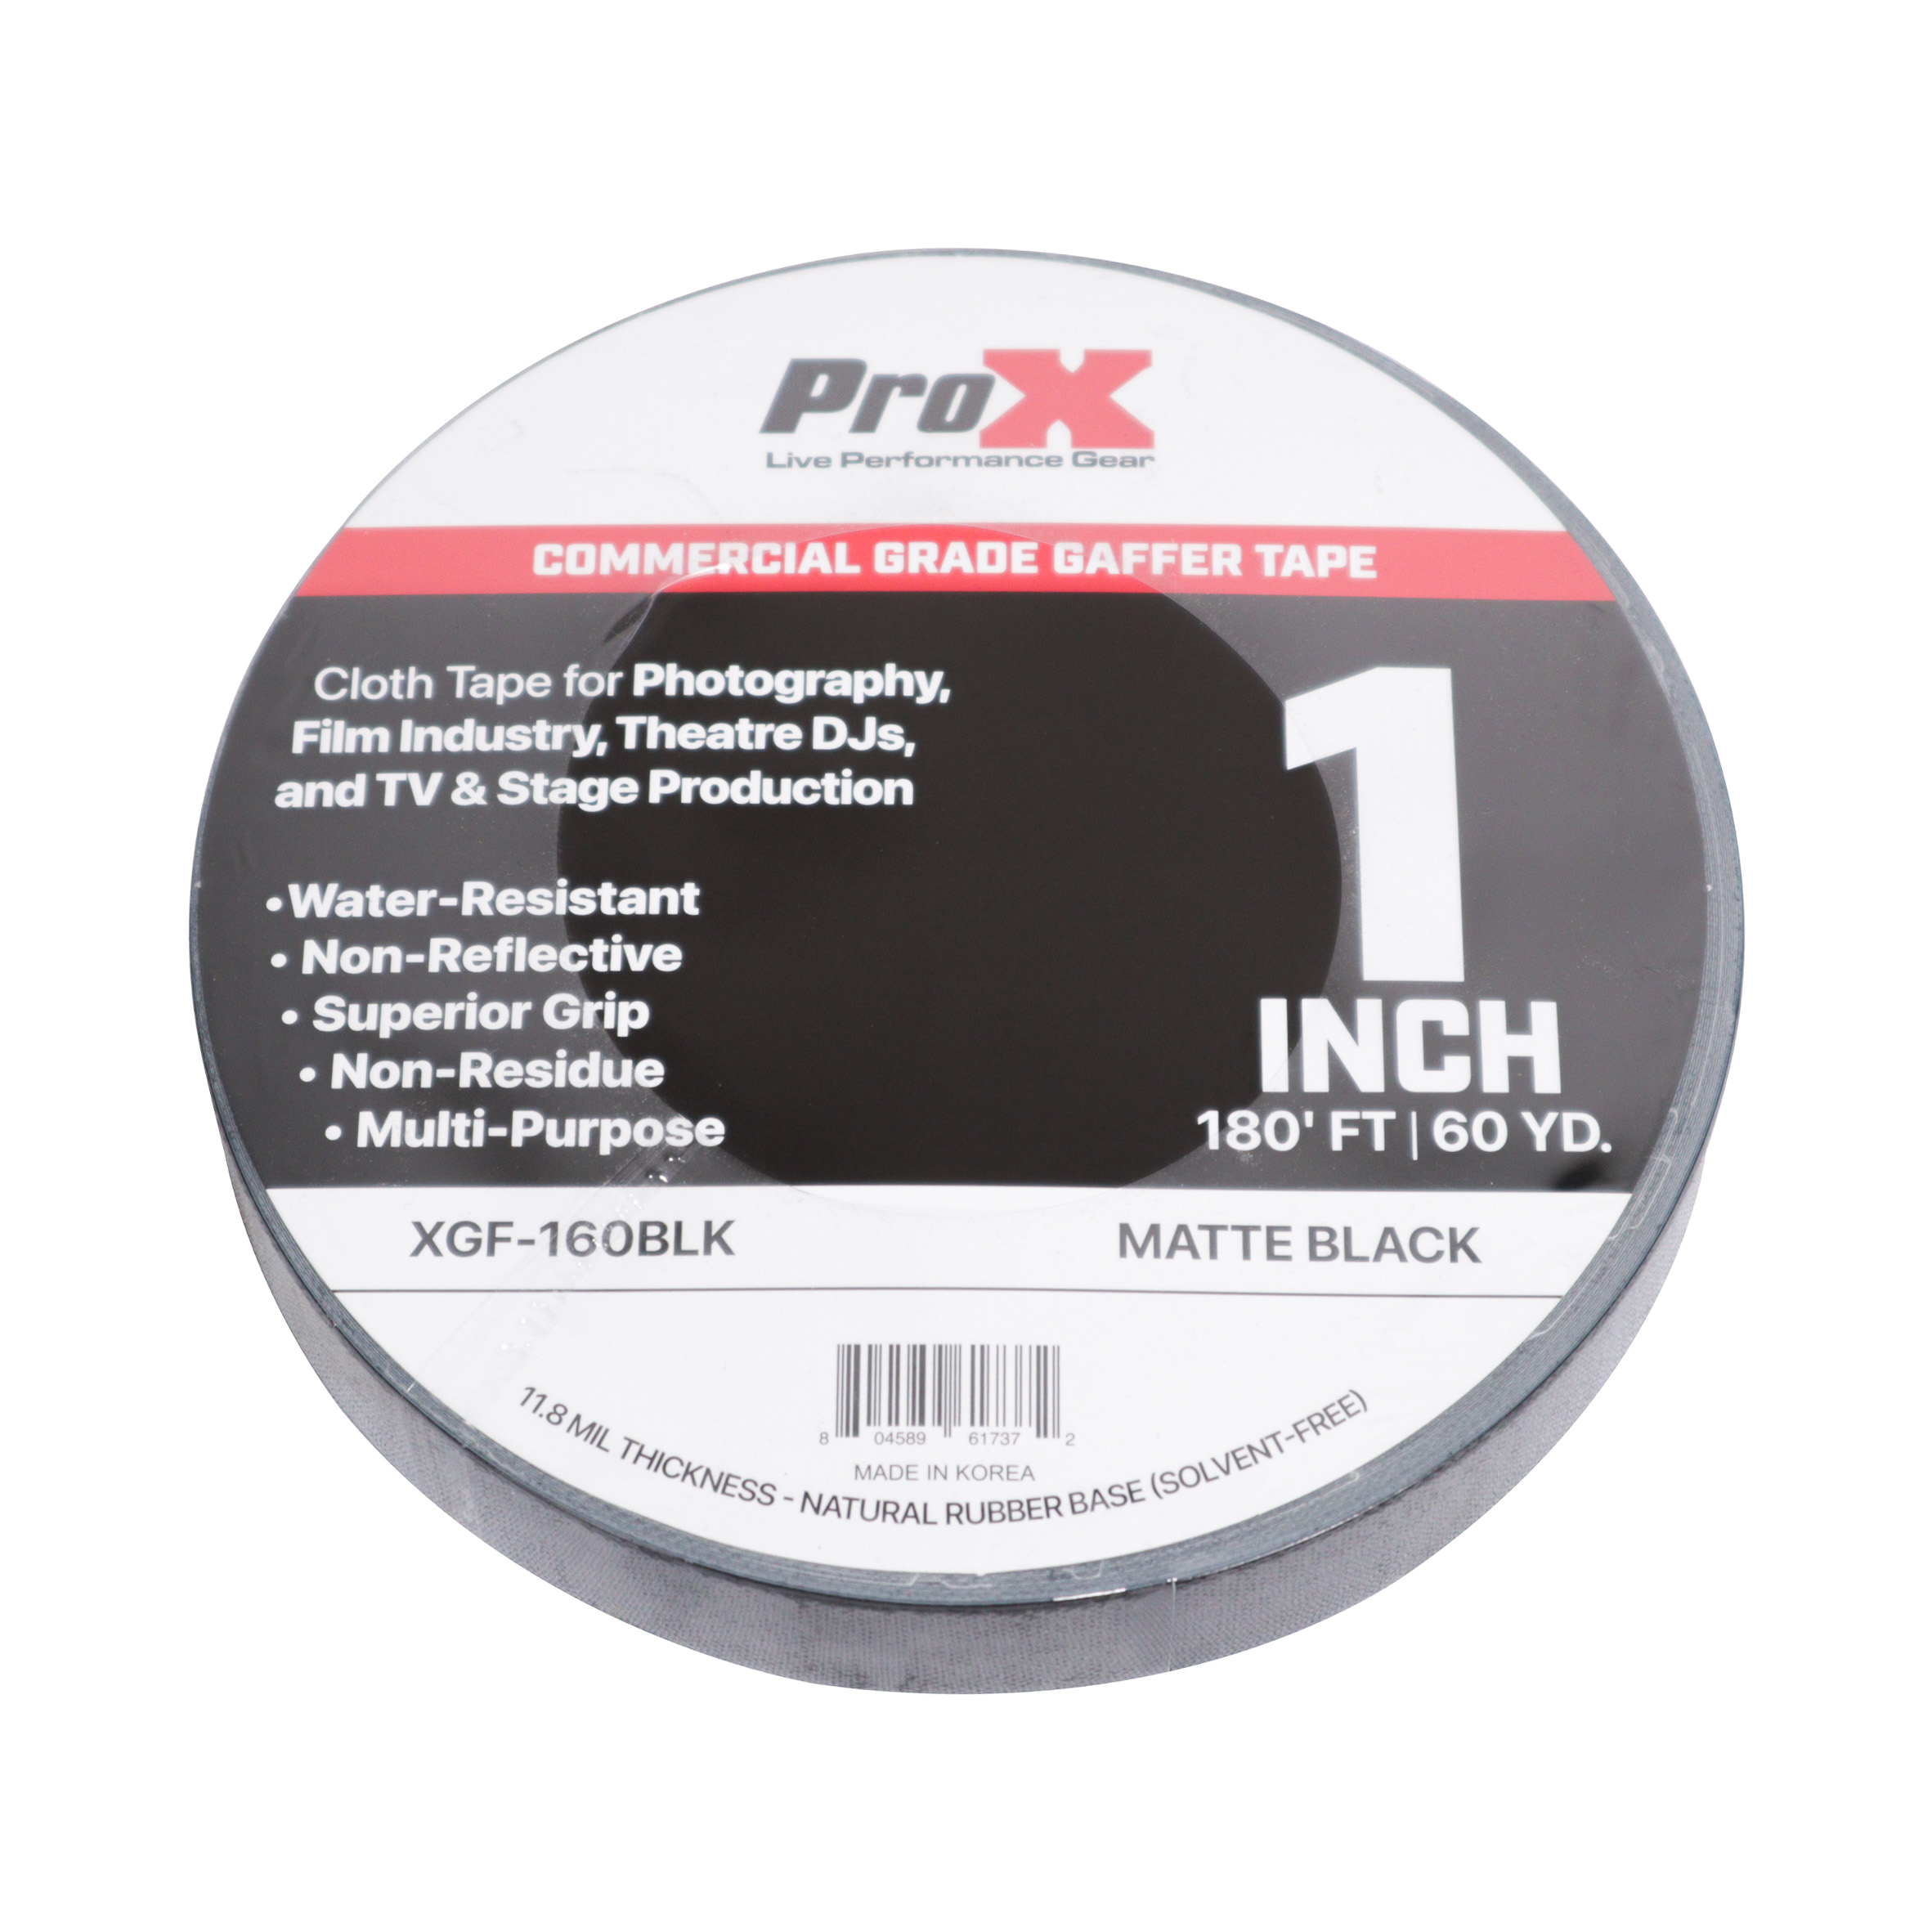 Prox XGF-360BLK - 3-Inch 60 Yard Matte Black Gaffer Tape